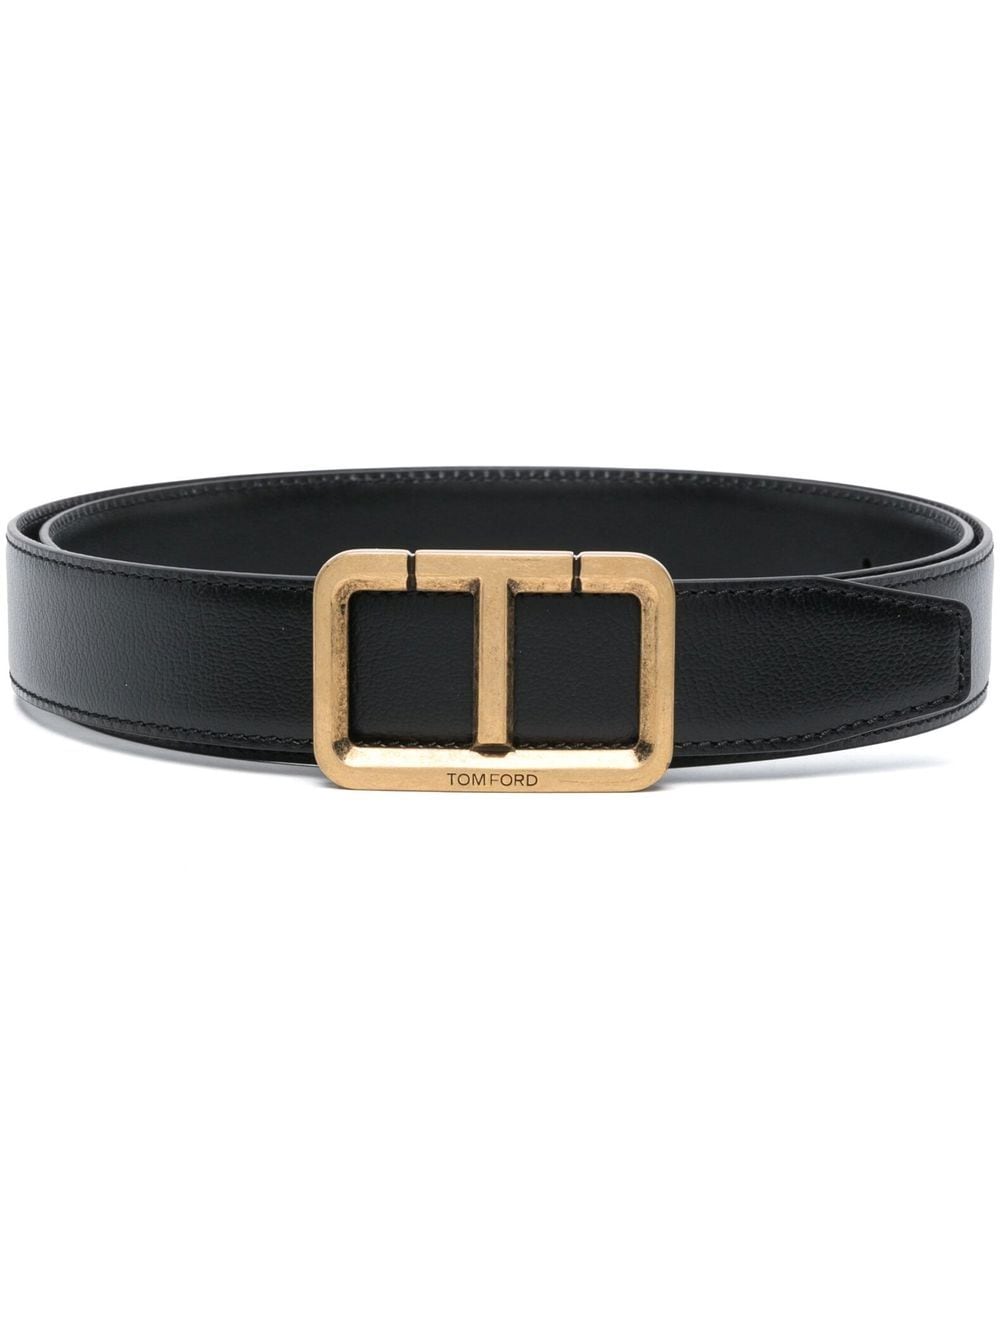 TOM FORD buckle leather belt - Black von TOM FORD